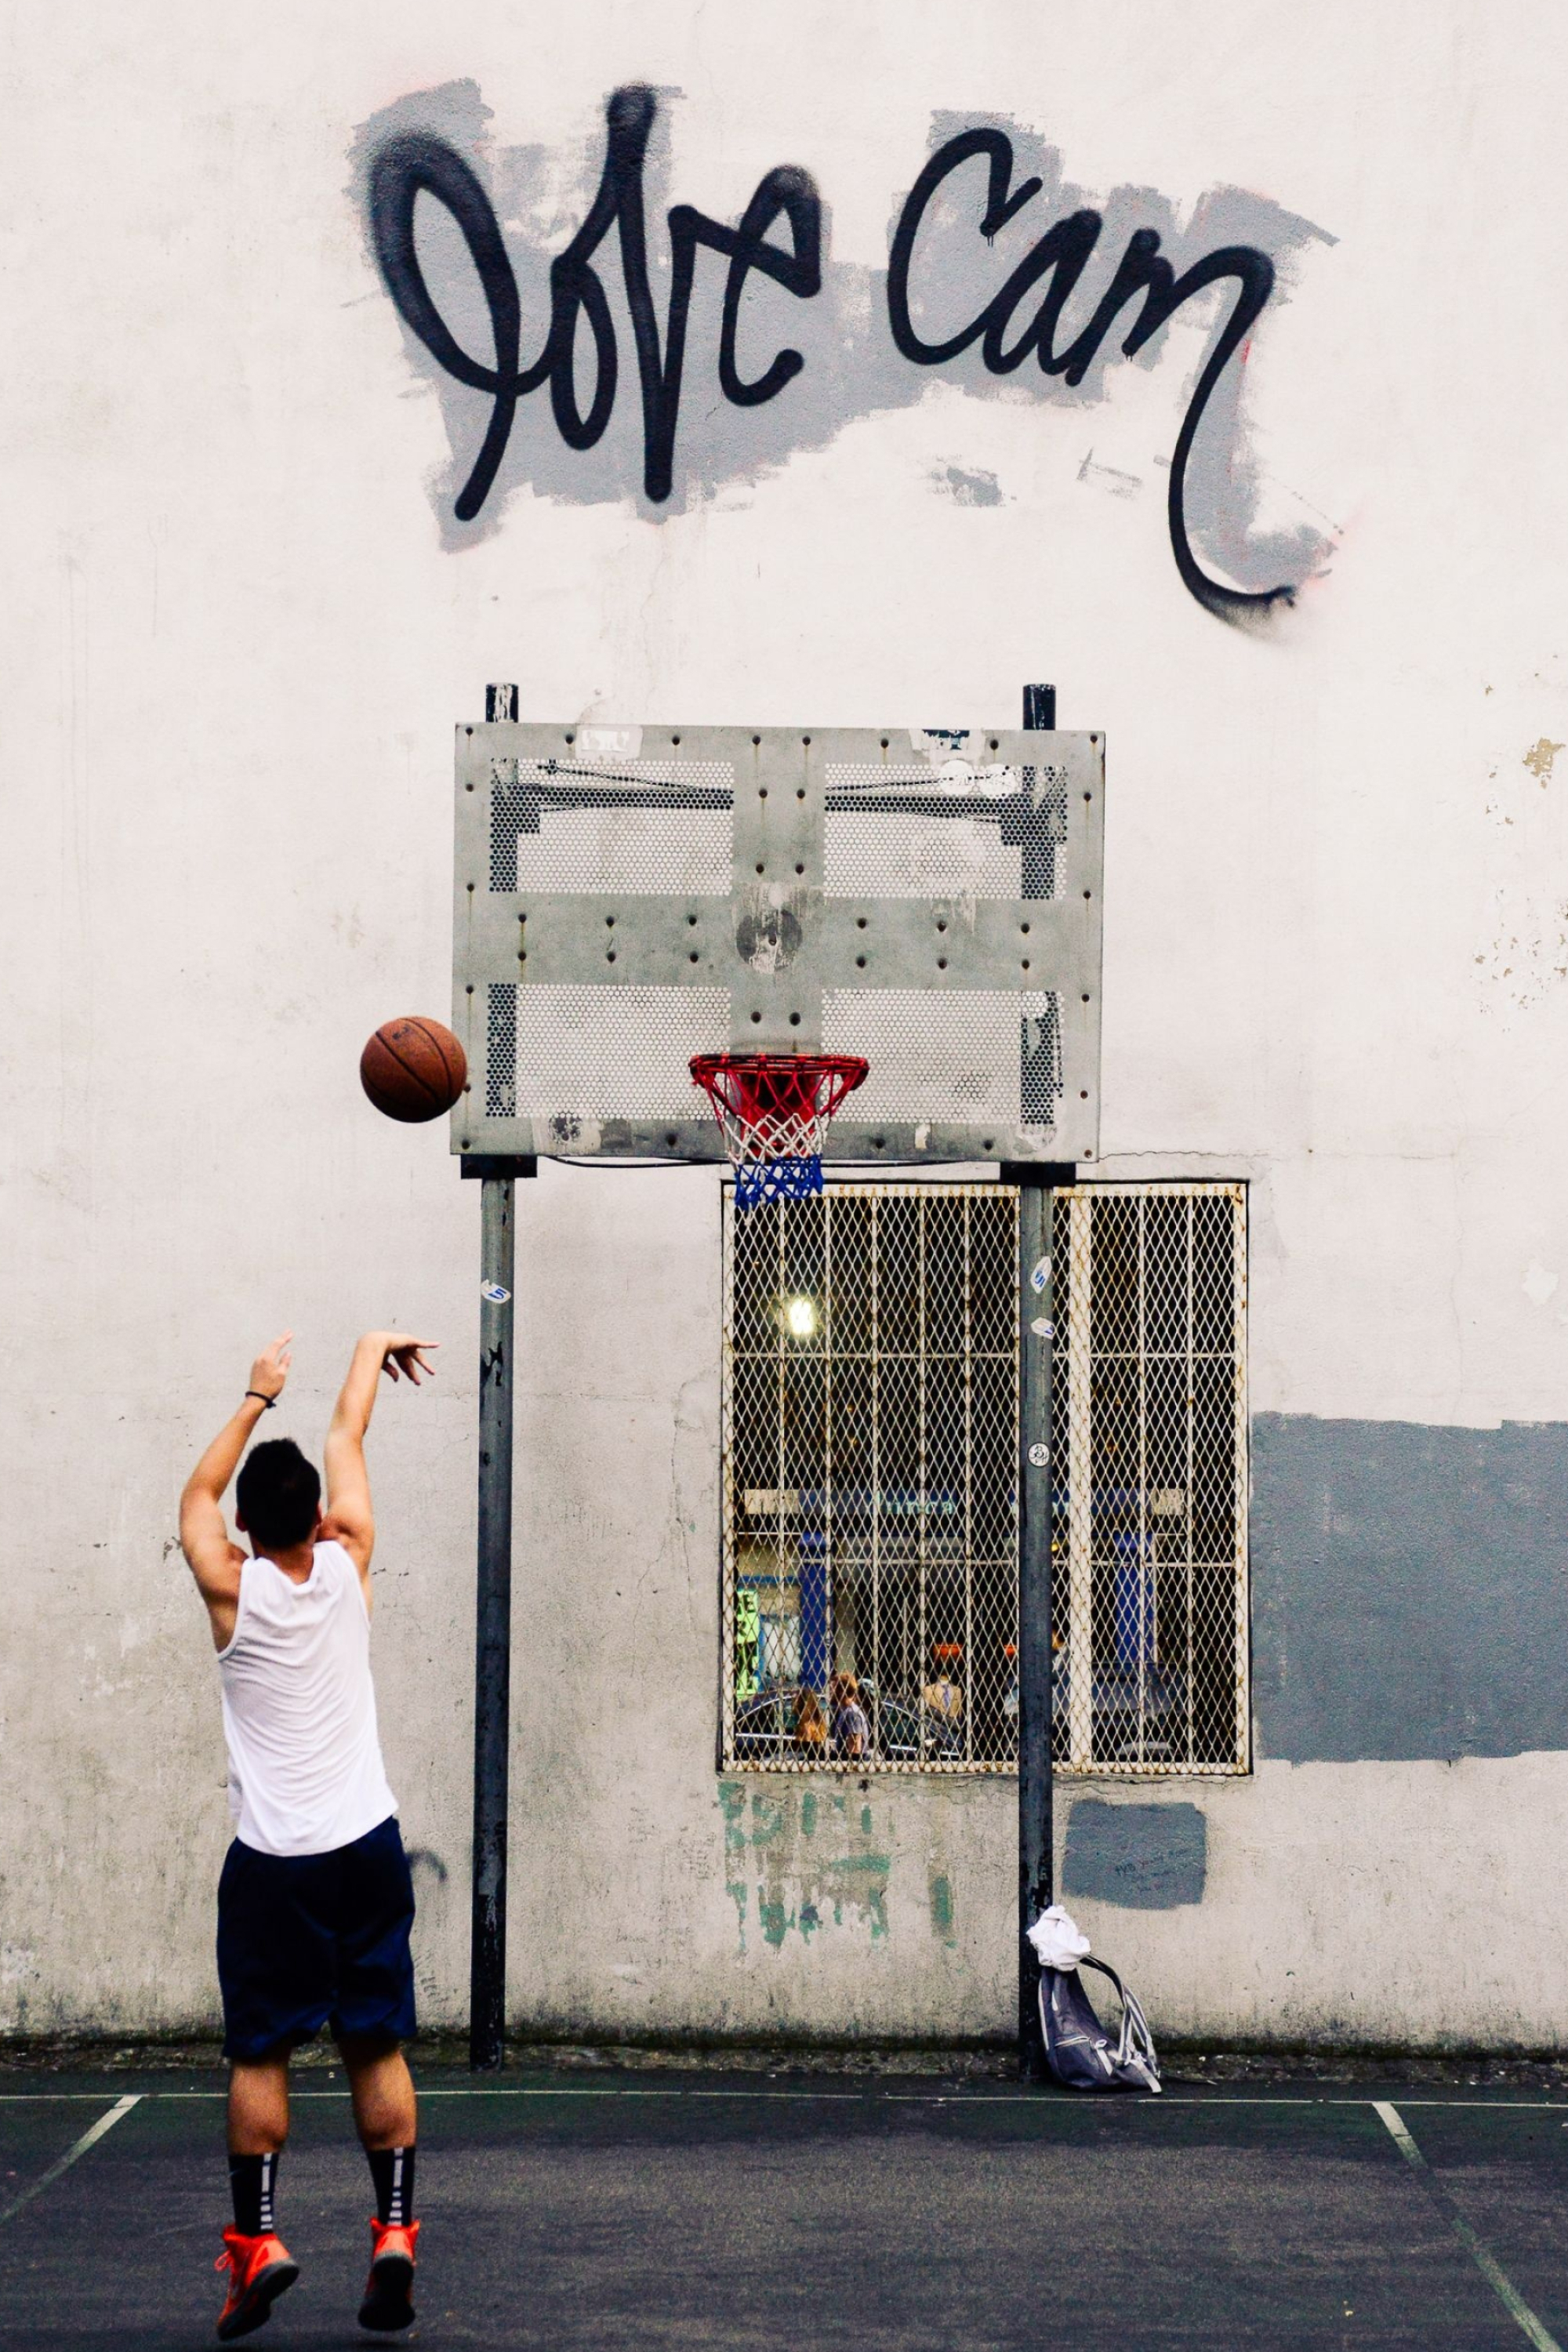 Streetball: 2-point basket training, Urban sports played on asphalt. 2000x3000 HD Wallpaper.